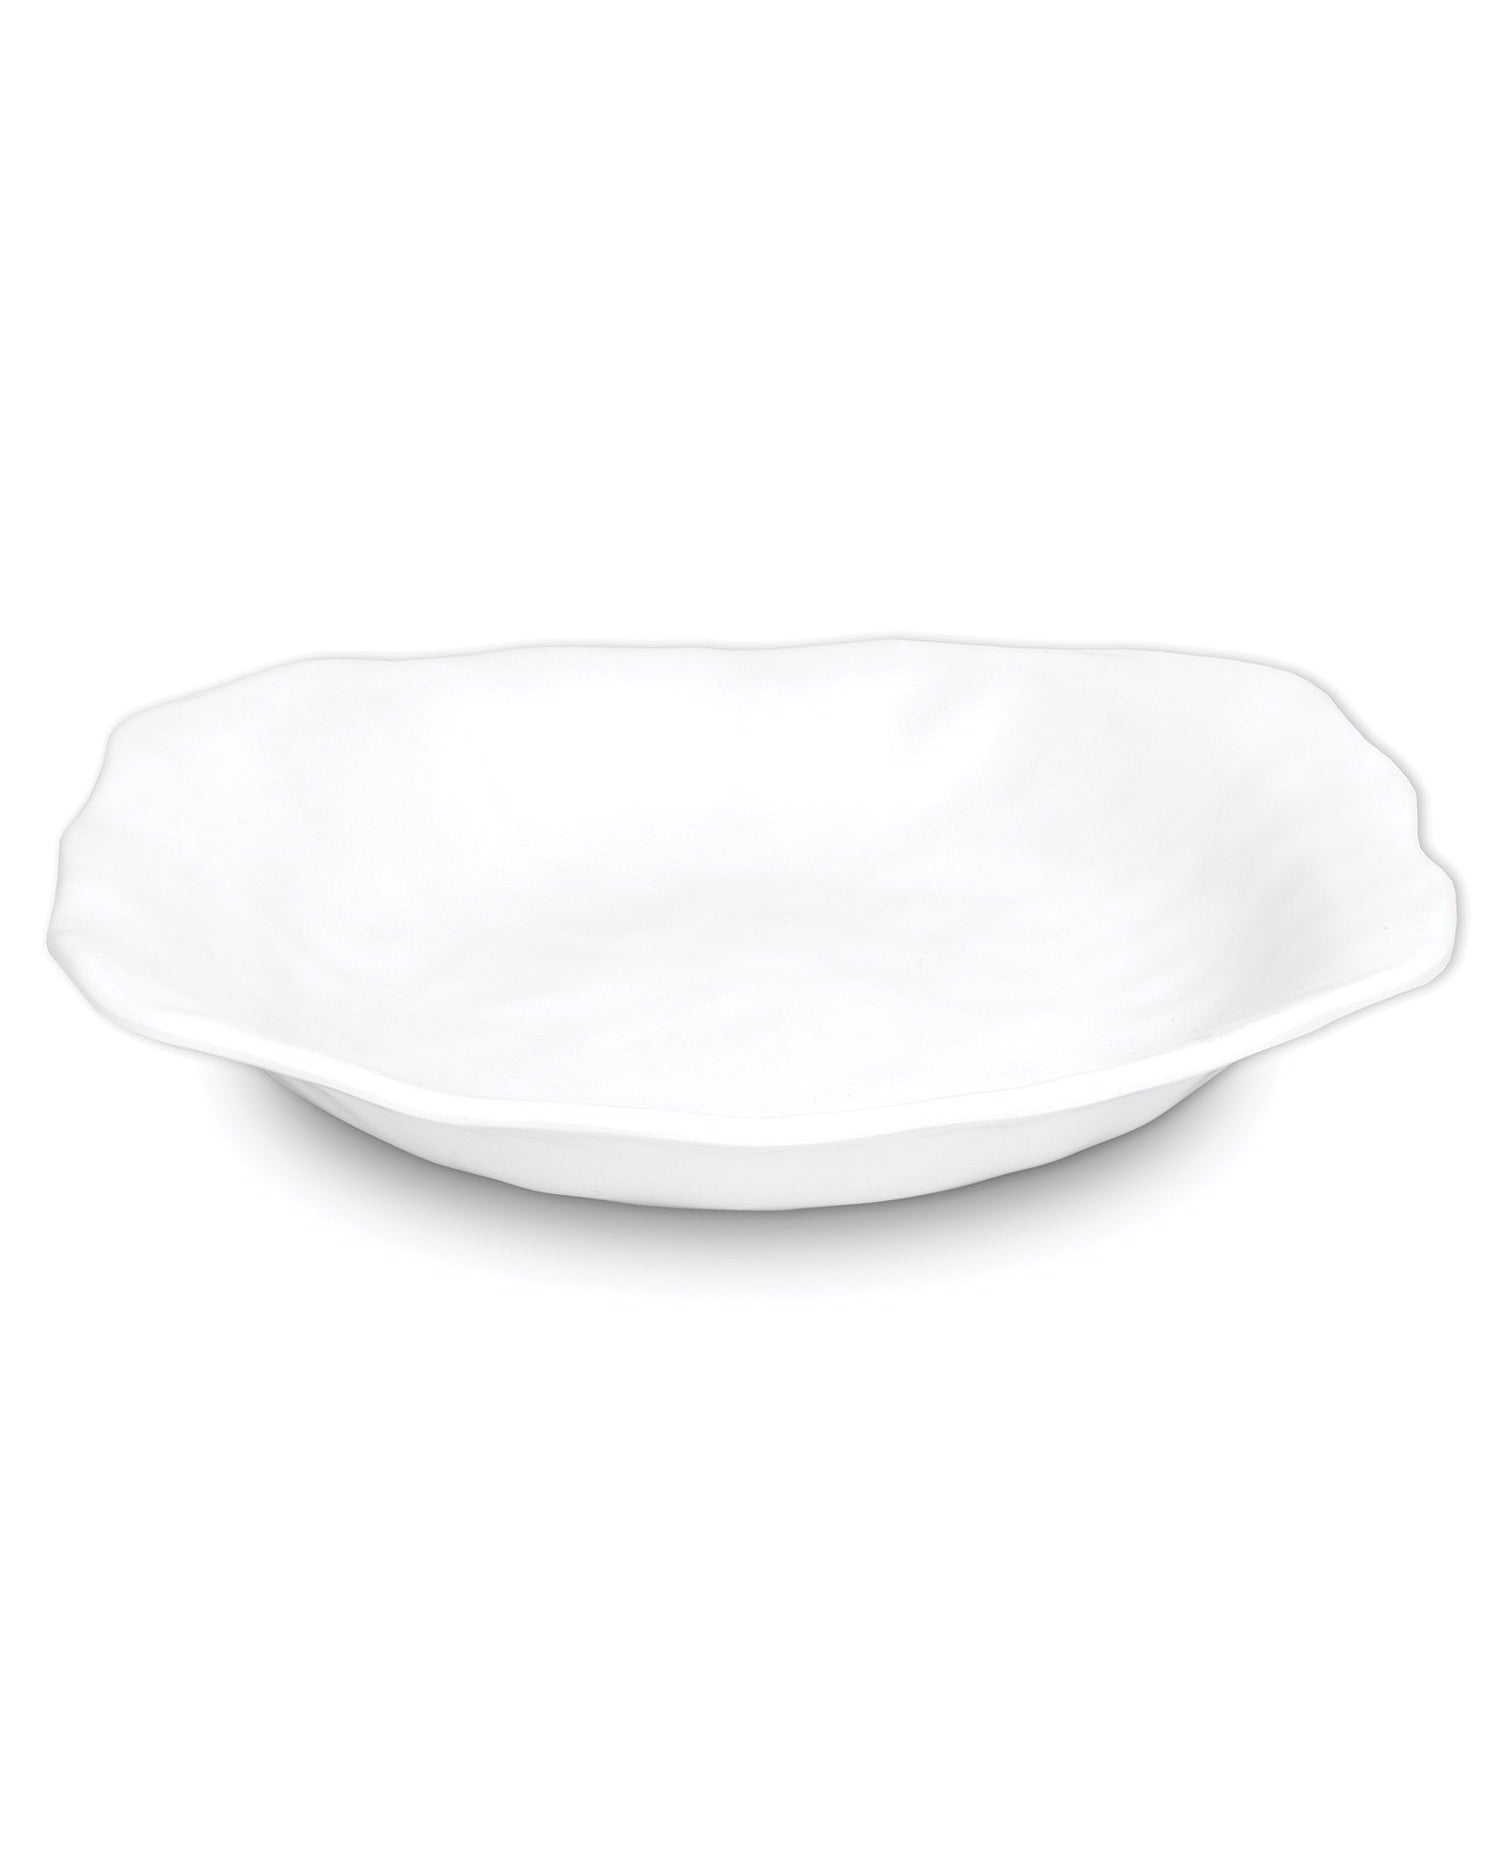 Michel Design Works White on White Melamine Pasta Bowl